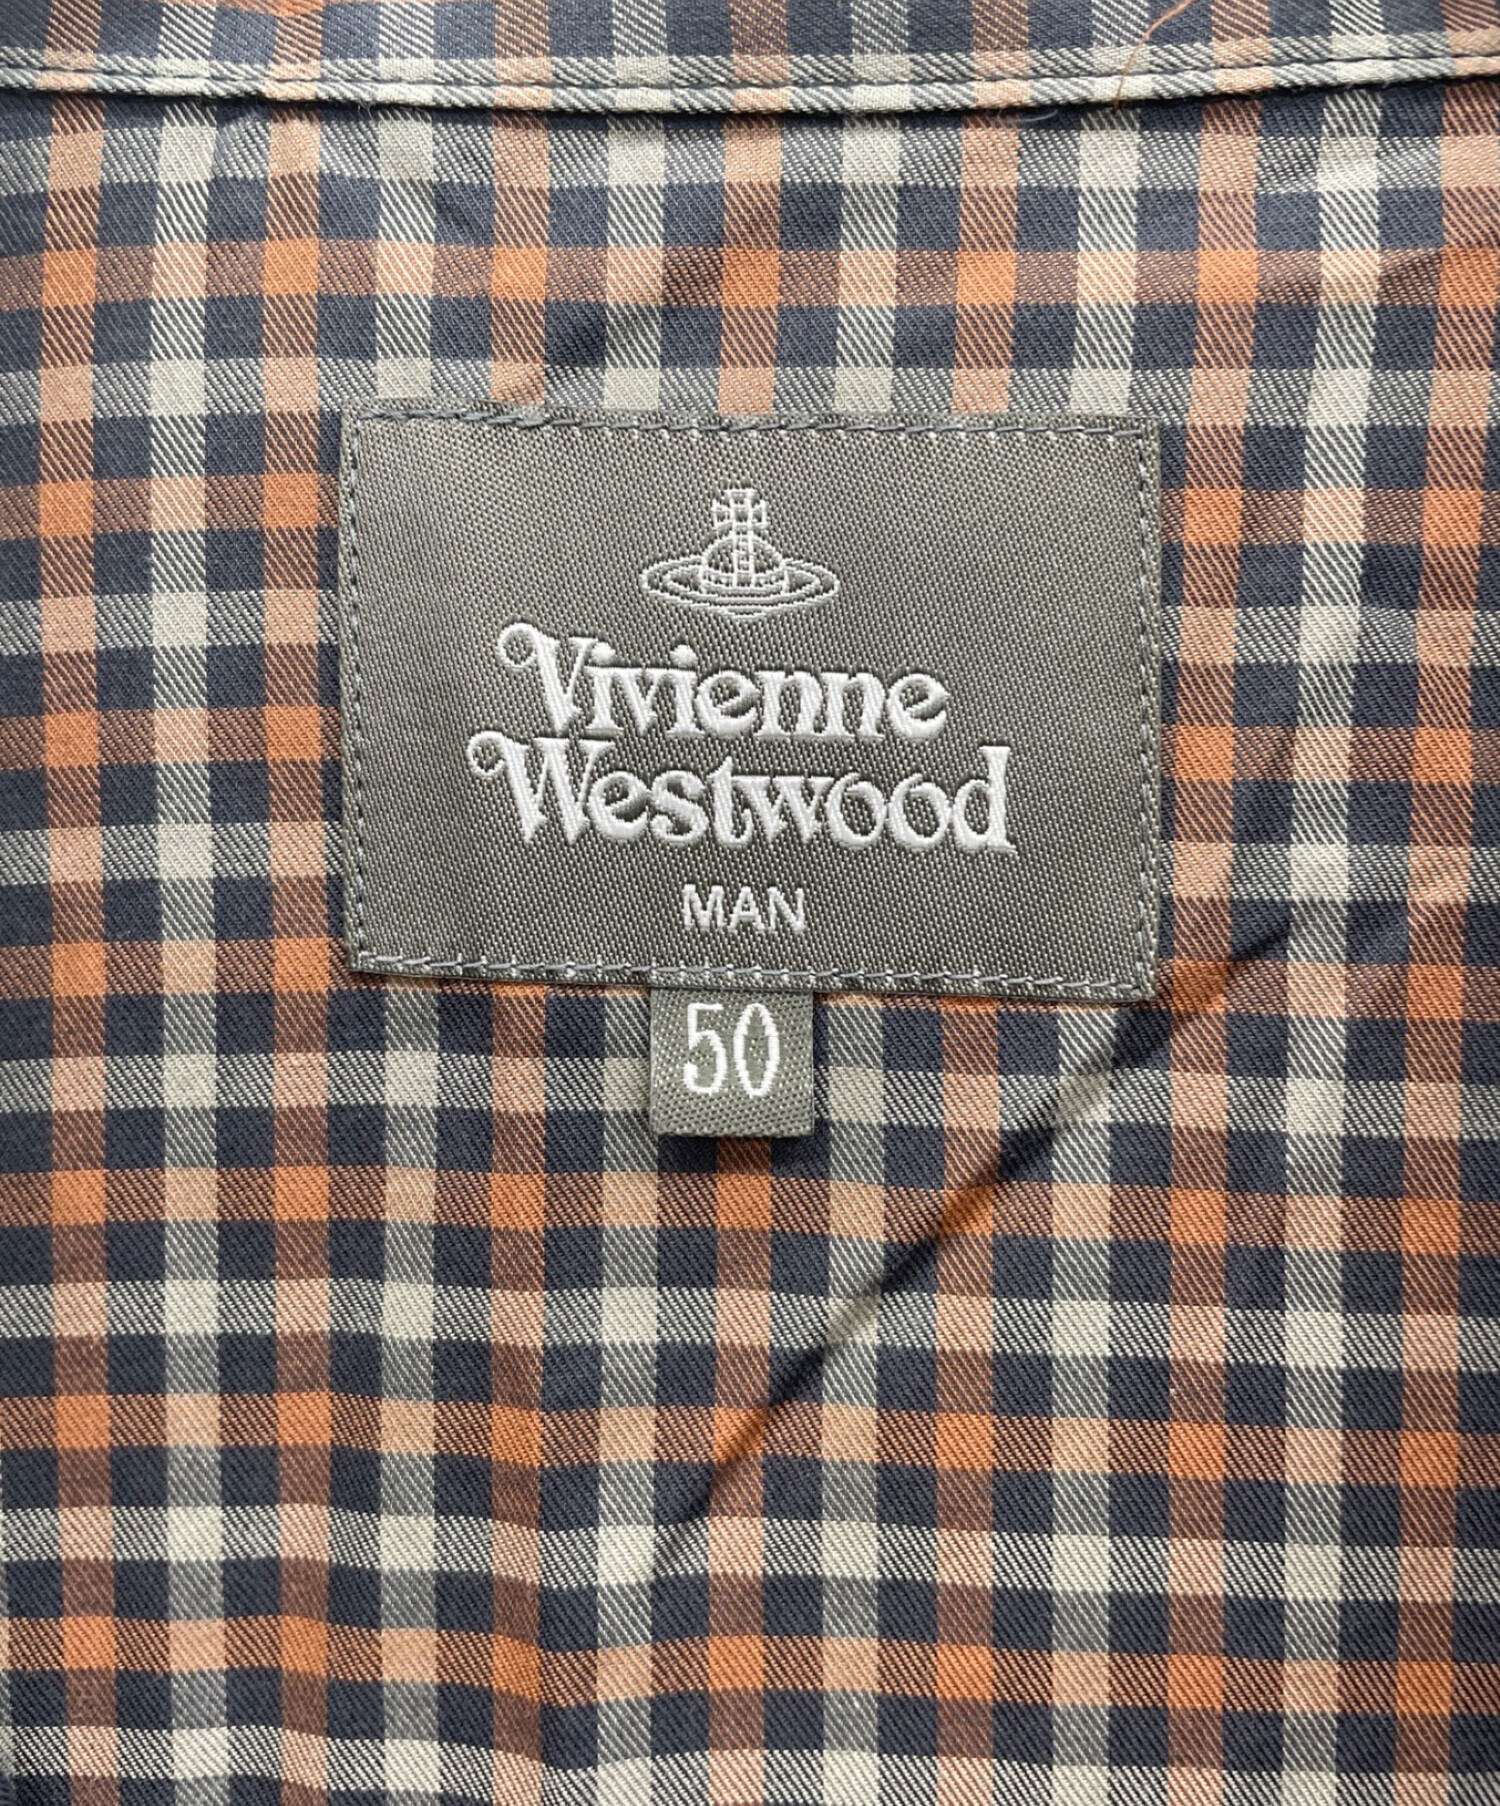 Vivienne Westwood (ヴィヴィアンウエストウッド) チェックシャツ ブラウン サイズ:50 未使用品